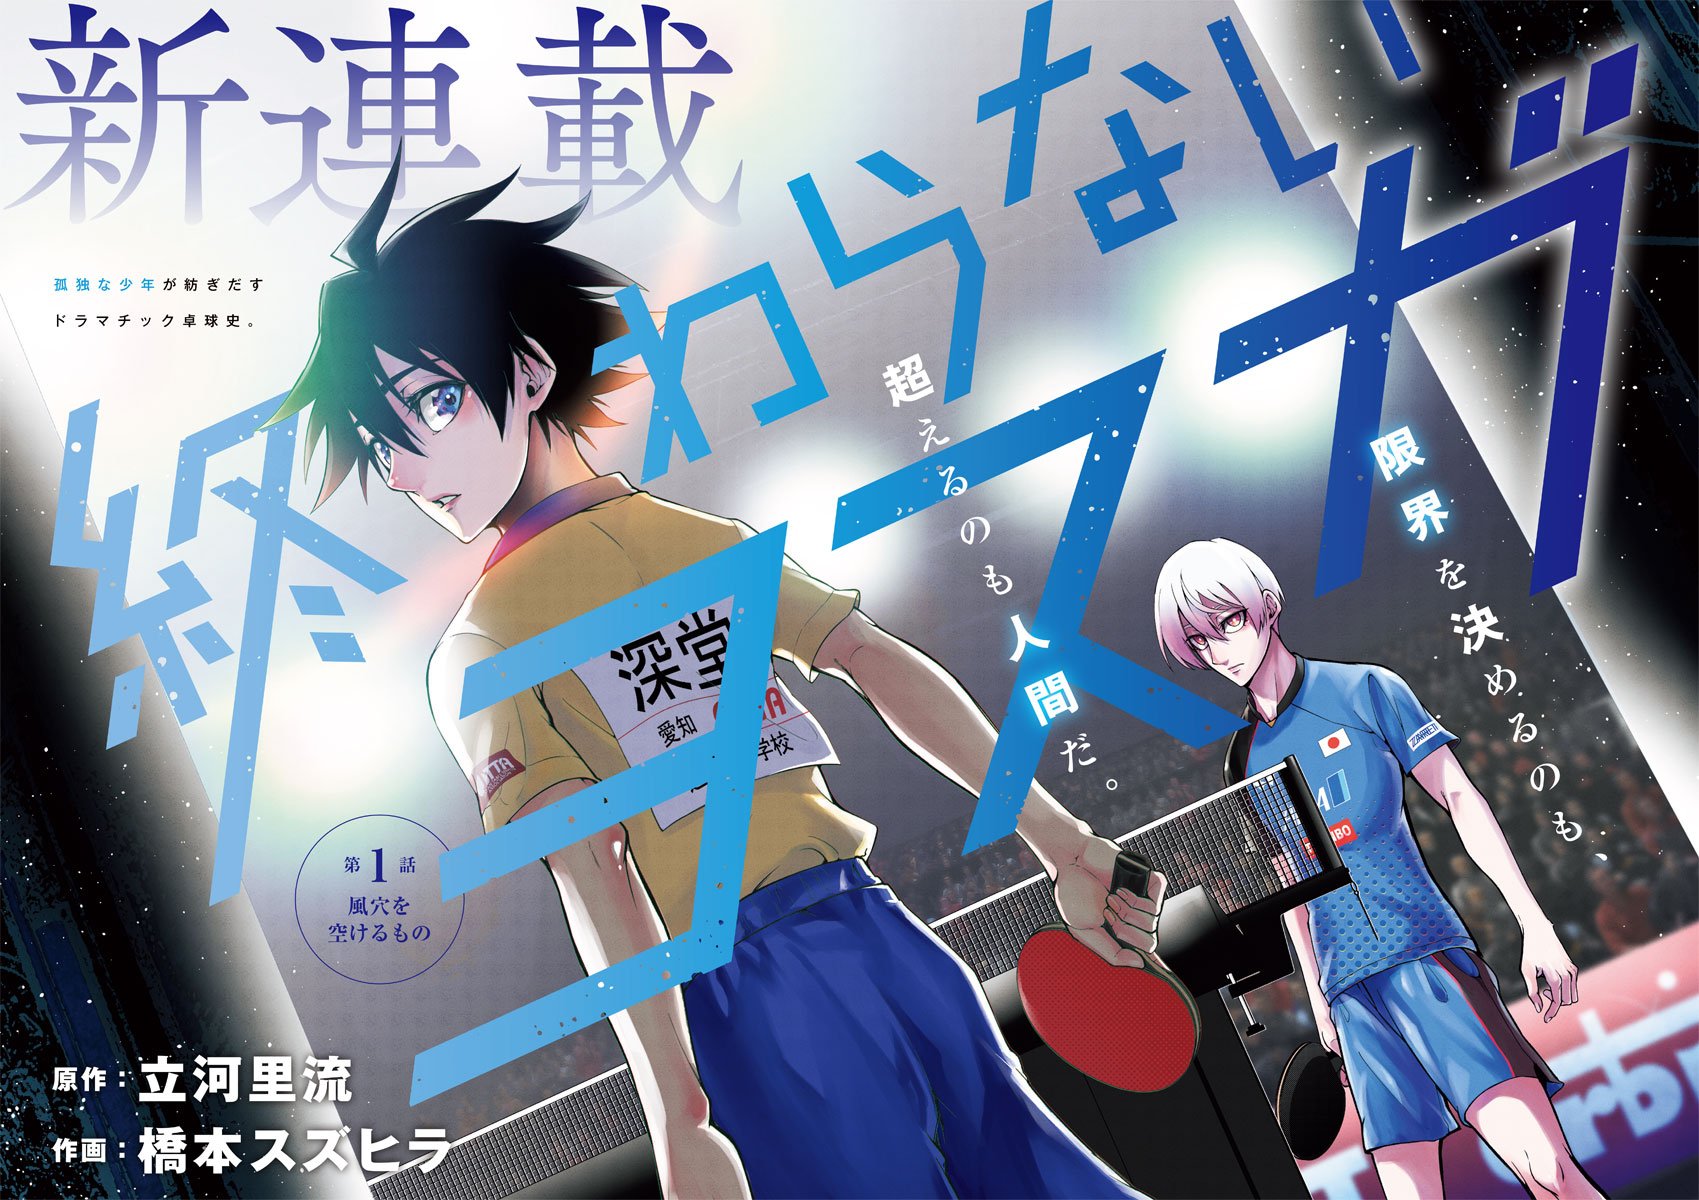 New Table-Tennis Drama Manga “Owaranai Yosuga” by Satoru Tatsukawa